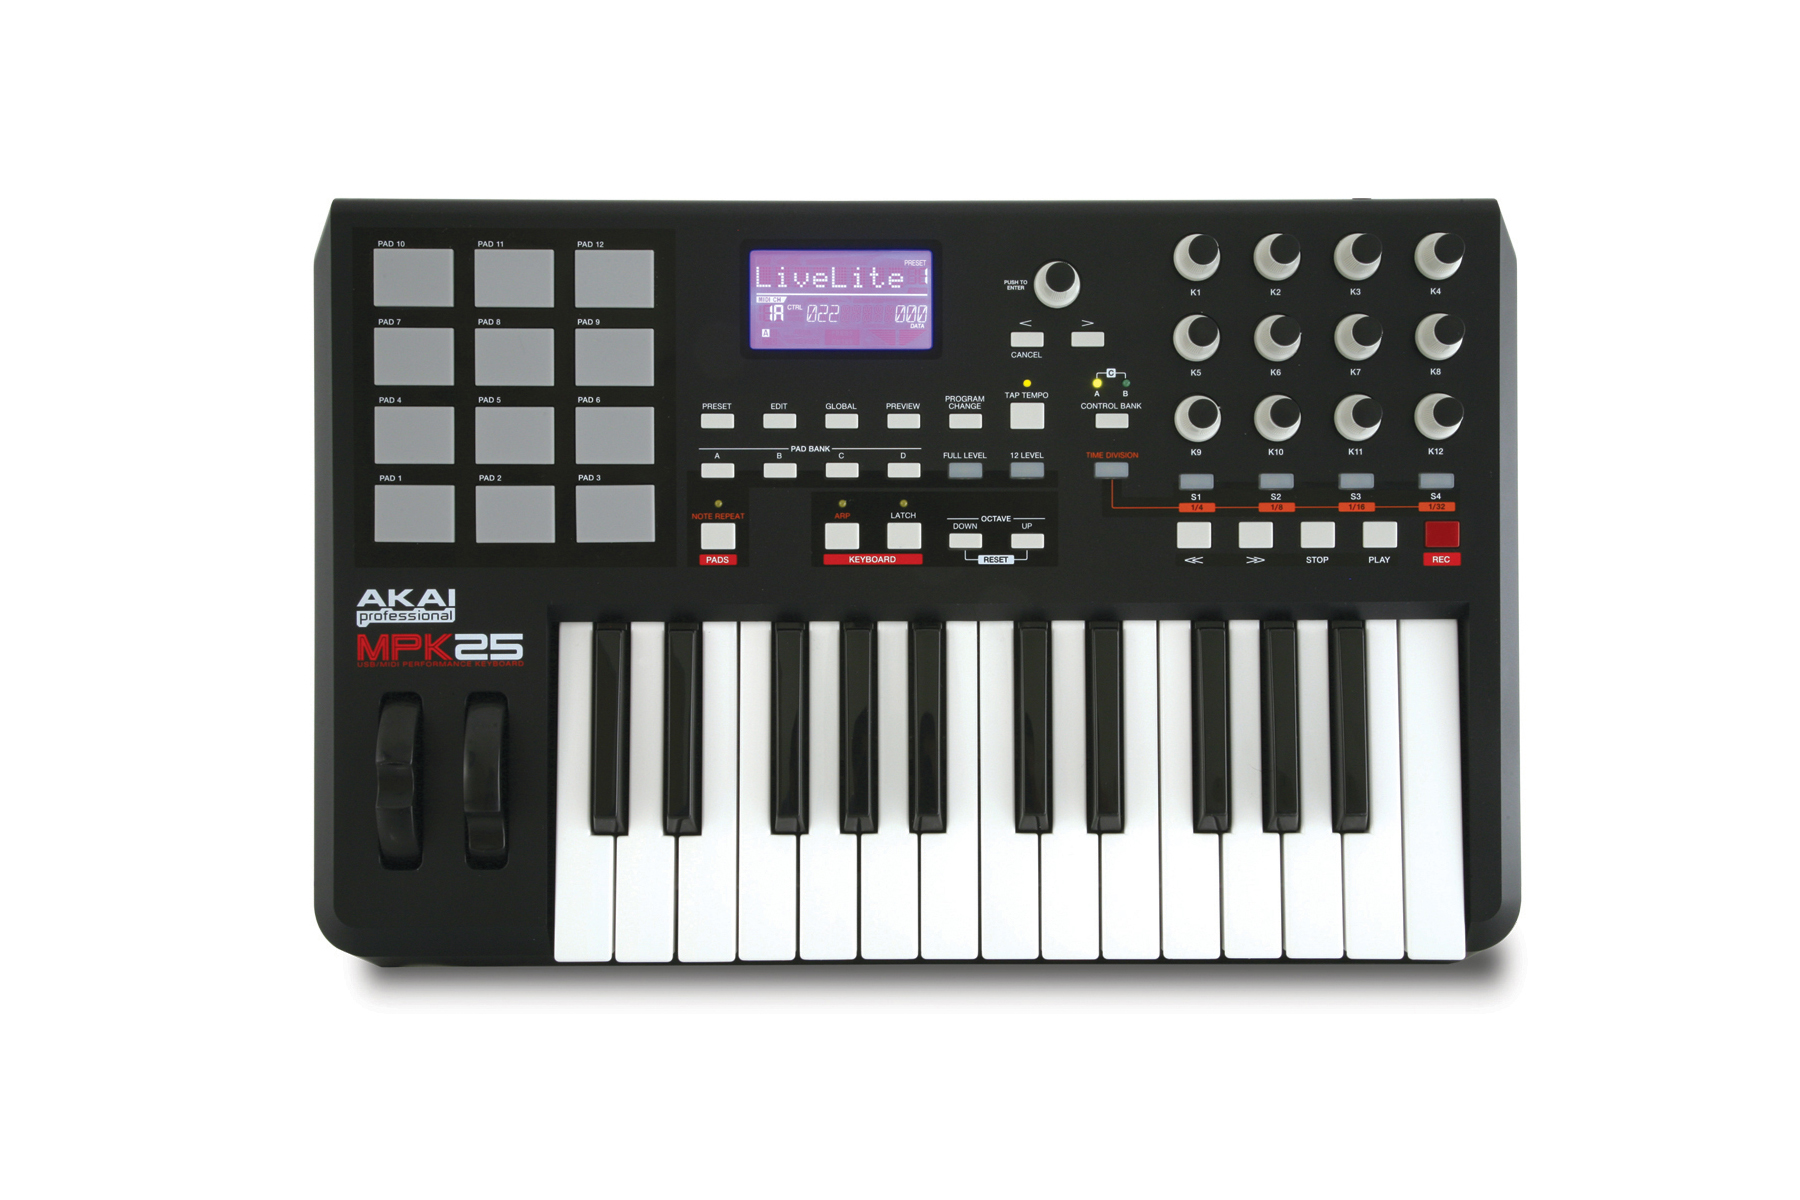 Akai Akai MPK25 MIDI Controller Keyboard, 25-Key